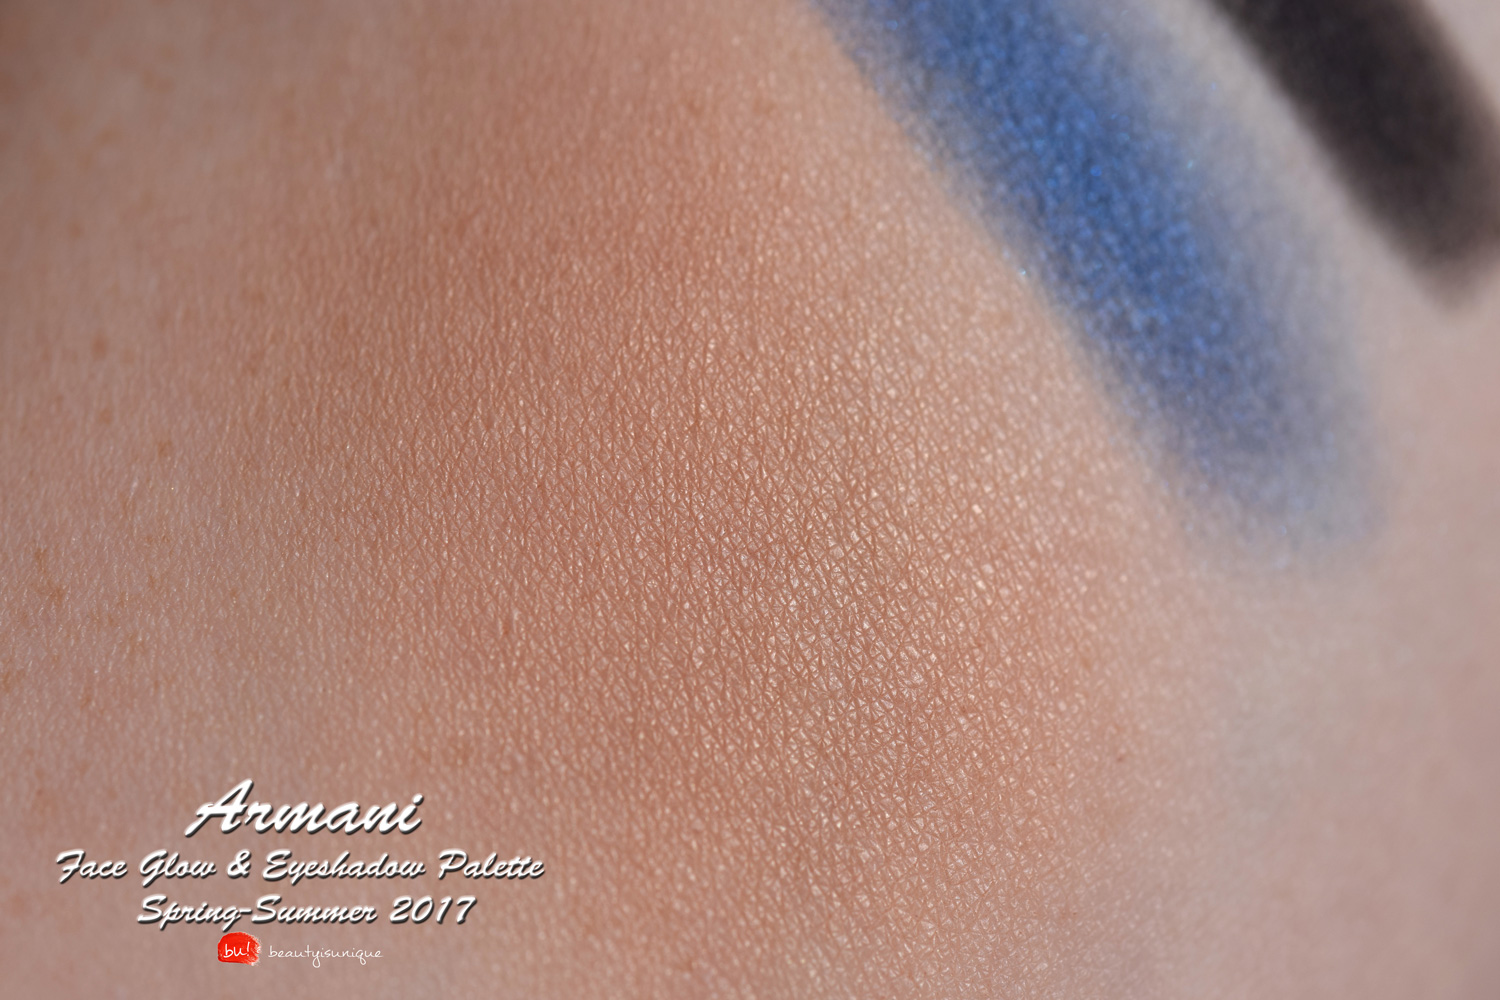 Armani-face-glow-eyeshadows-palette-spring-summer-2017